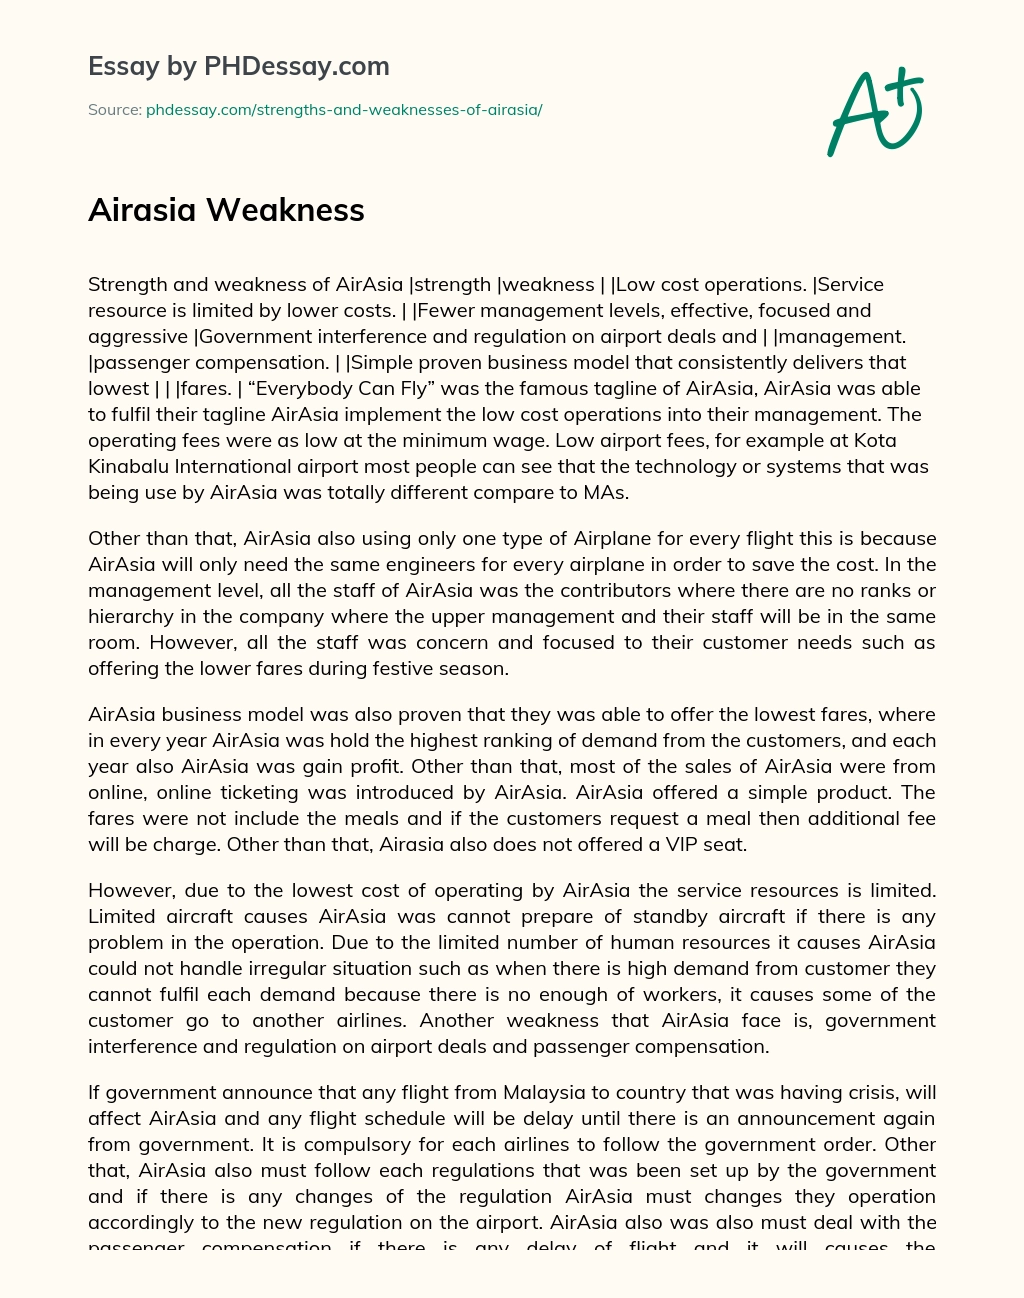 Airasia Weakness essay